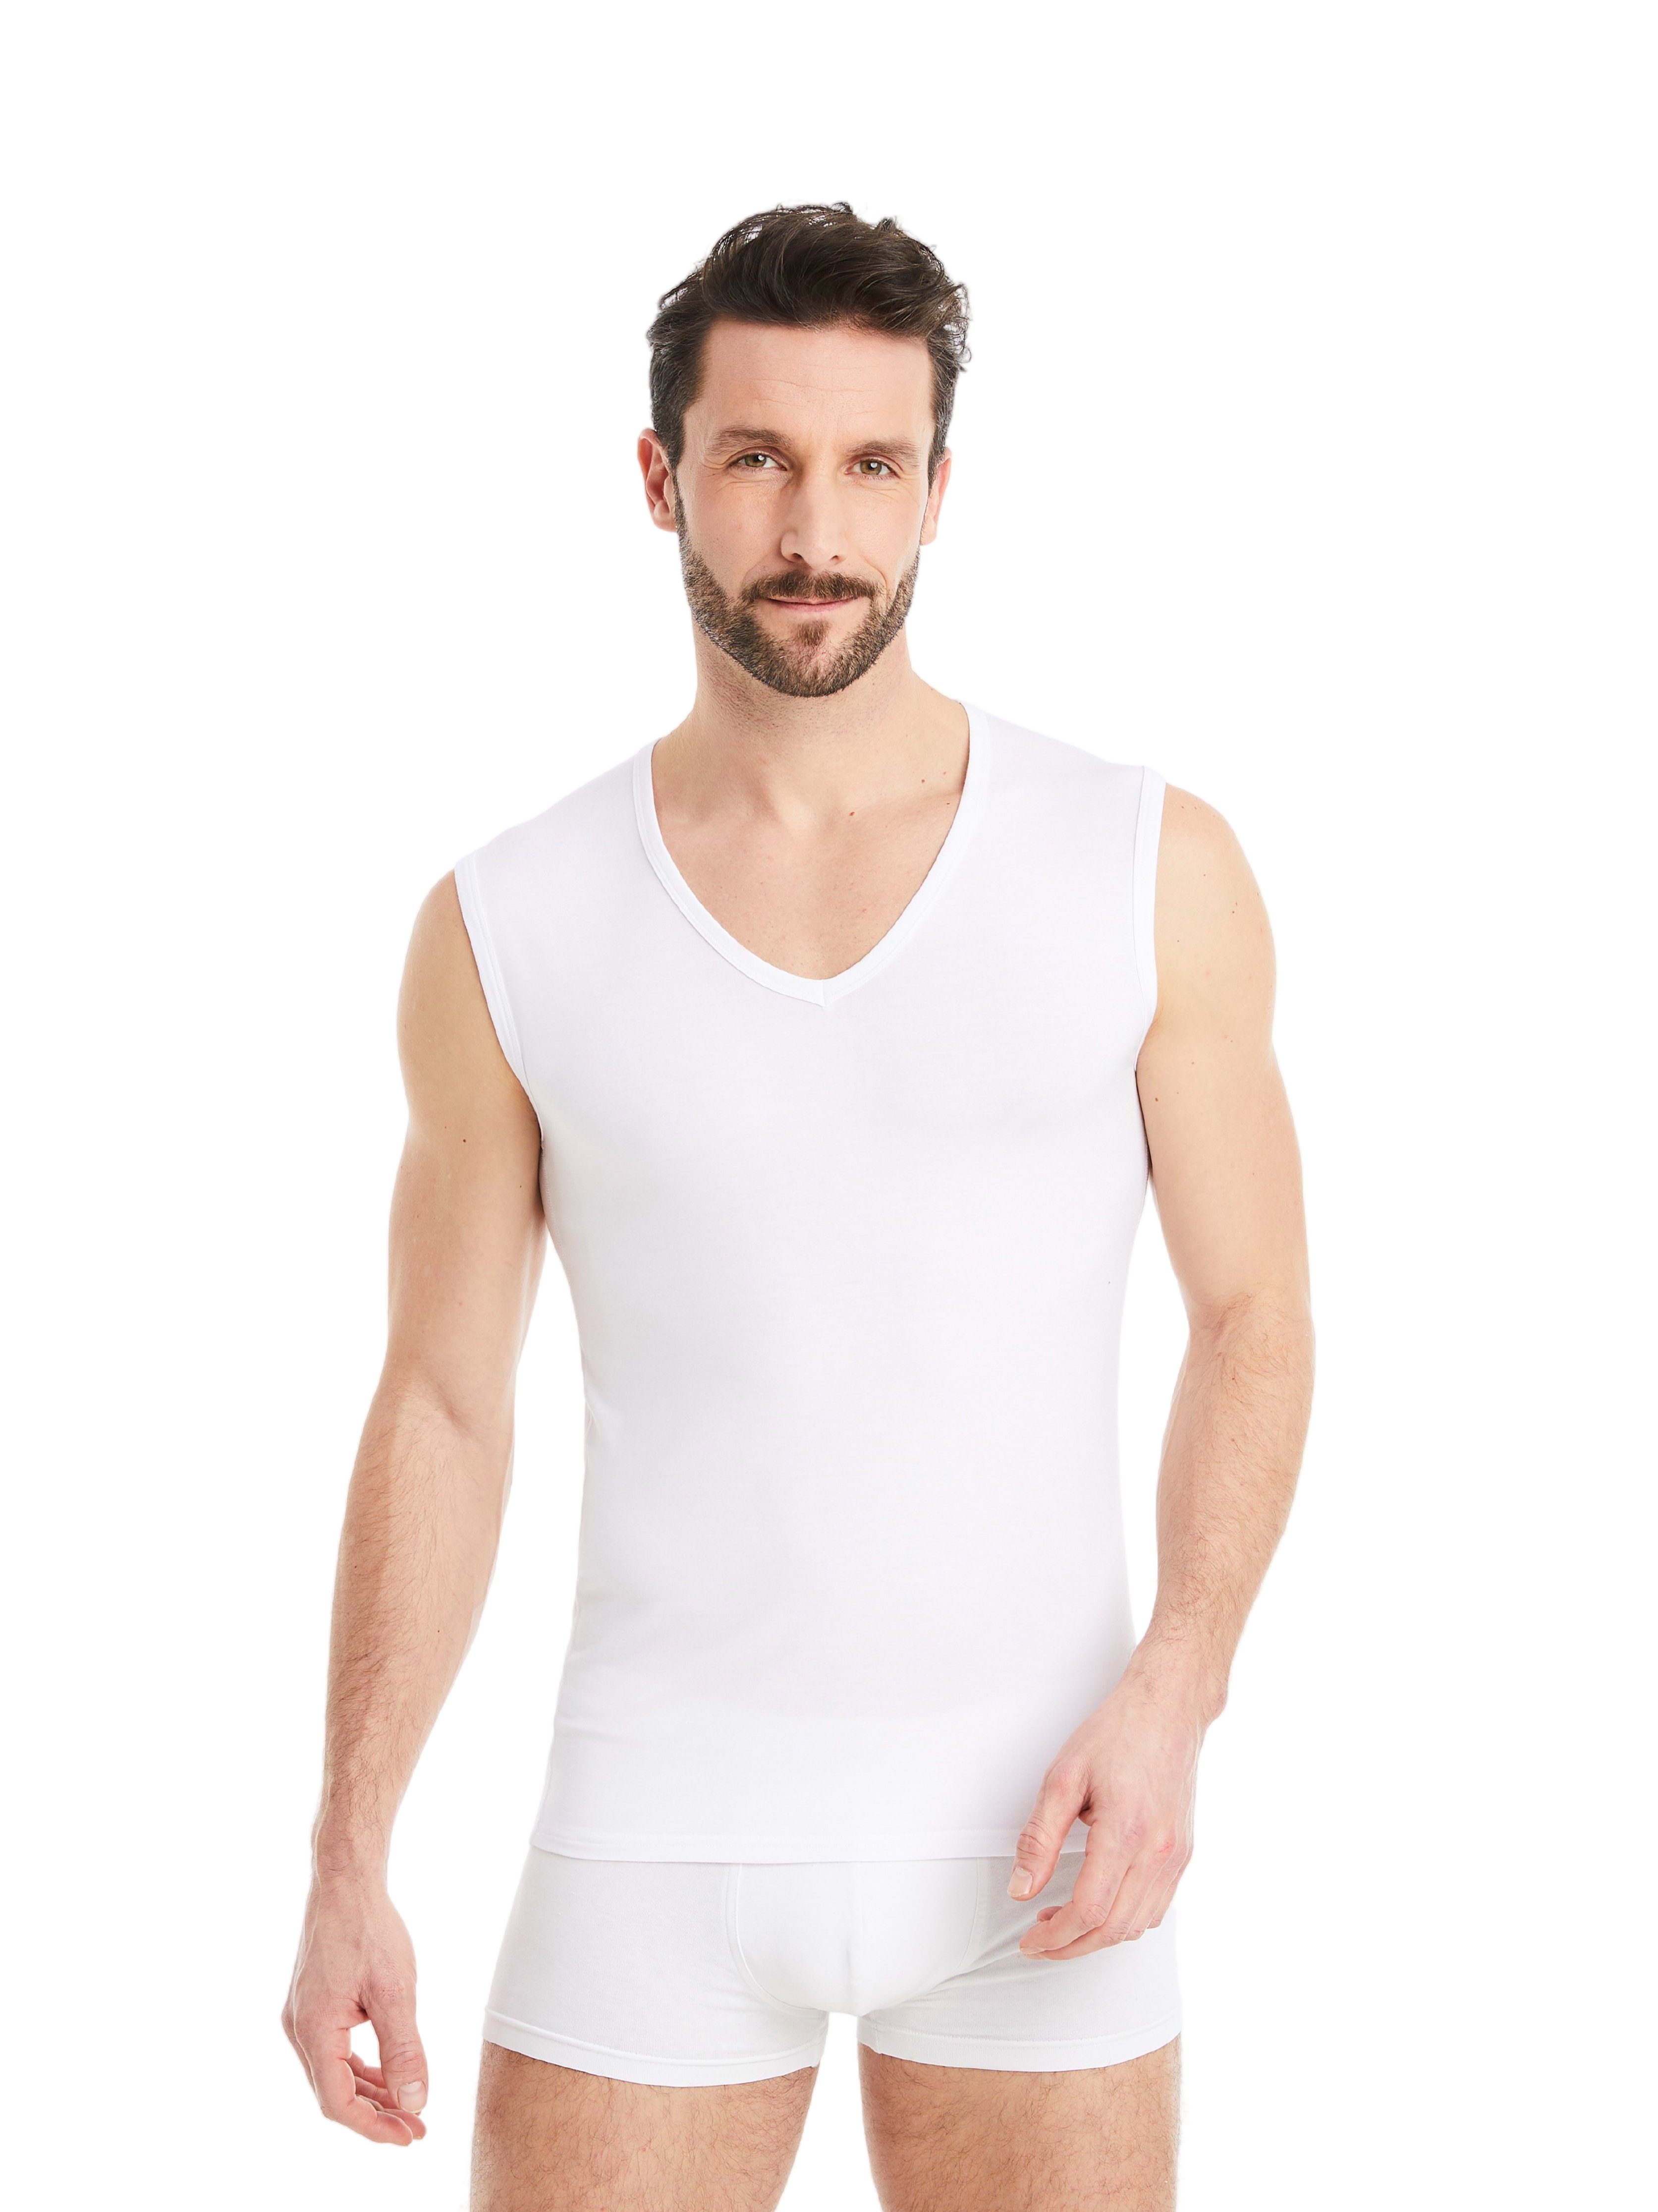 FINN Design Achselhemd Business Unterhemd Ärmellos mit V-Ausschnitt Herren feiner Micro-Modal Stoff, maximaler Tragekomfort Weiß